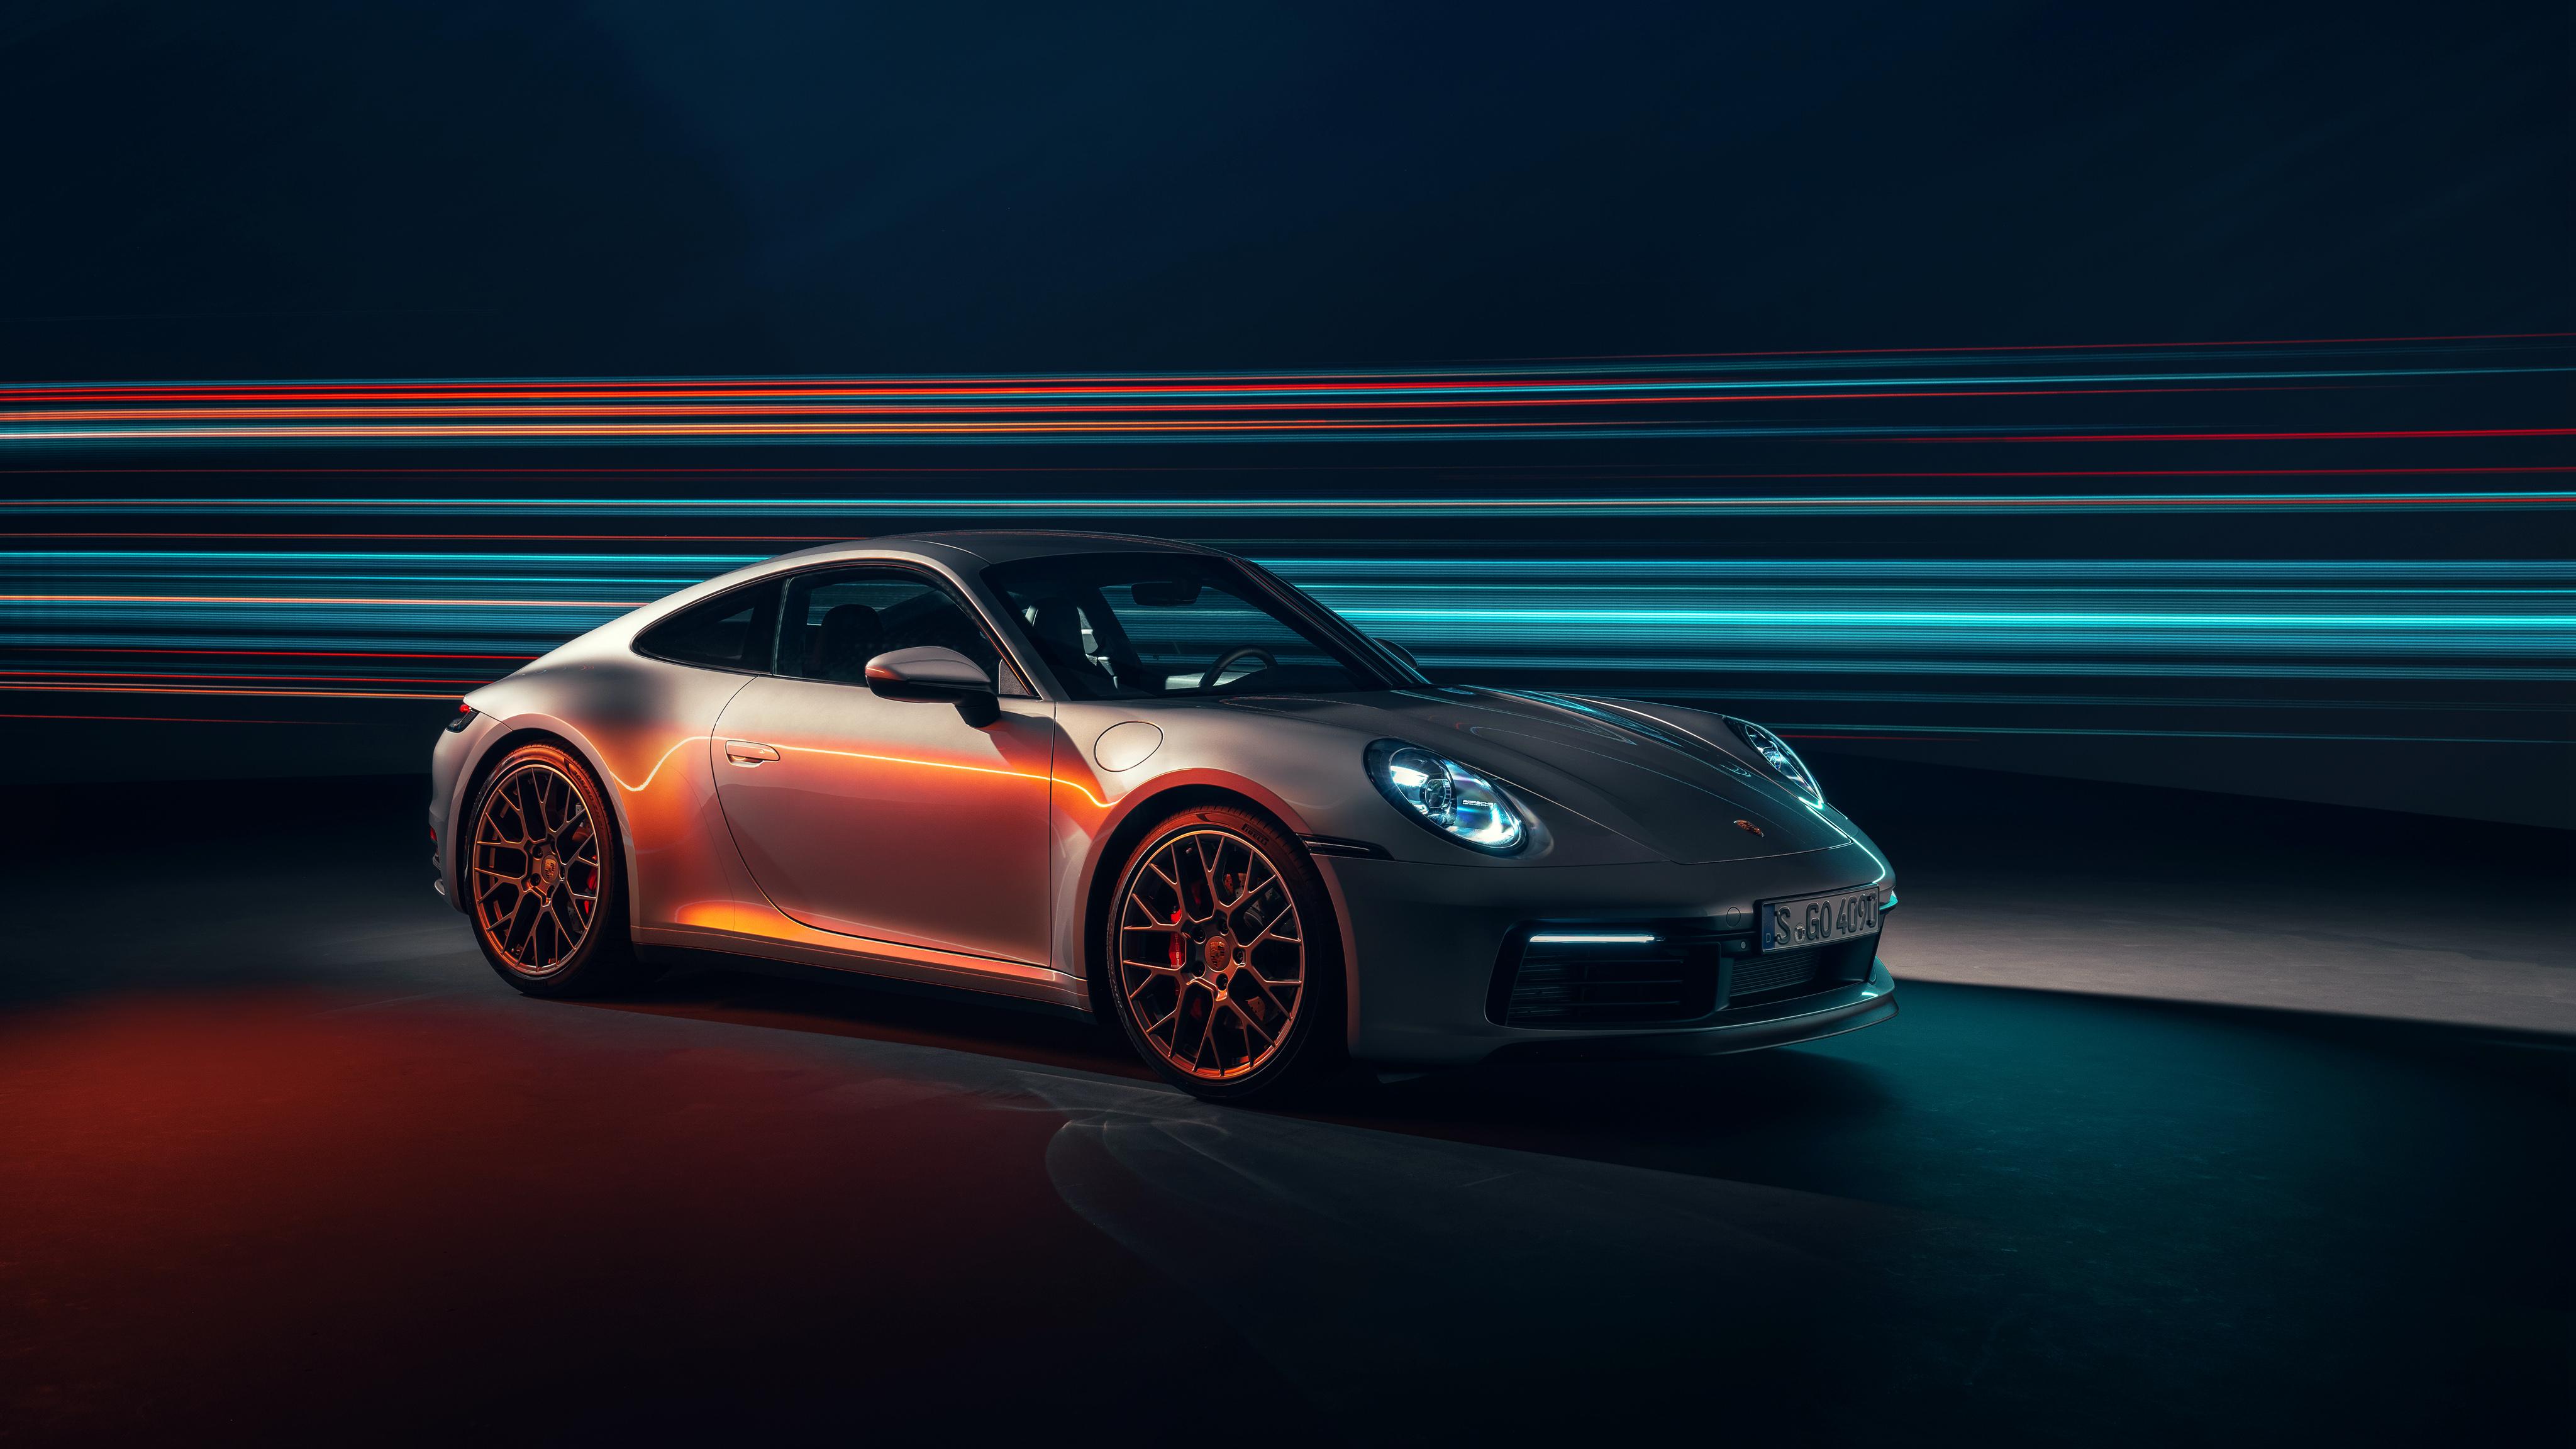 4096 x 2304 · jpeg - Porsche 911 Carrera 4S 2019 4K 5 Wallpaper | HD Car Wallpapers | ID #11633